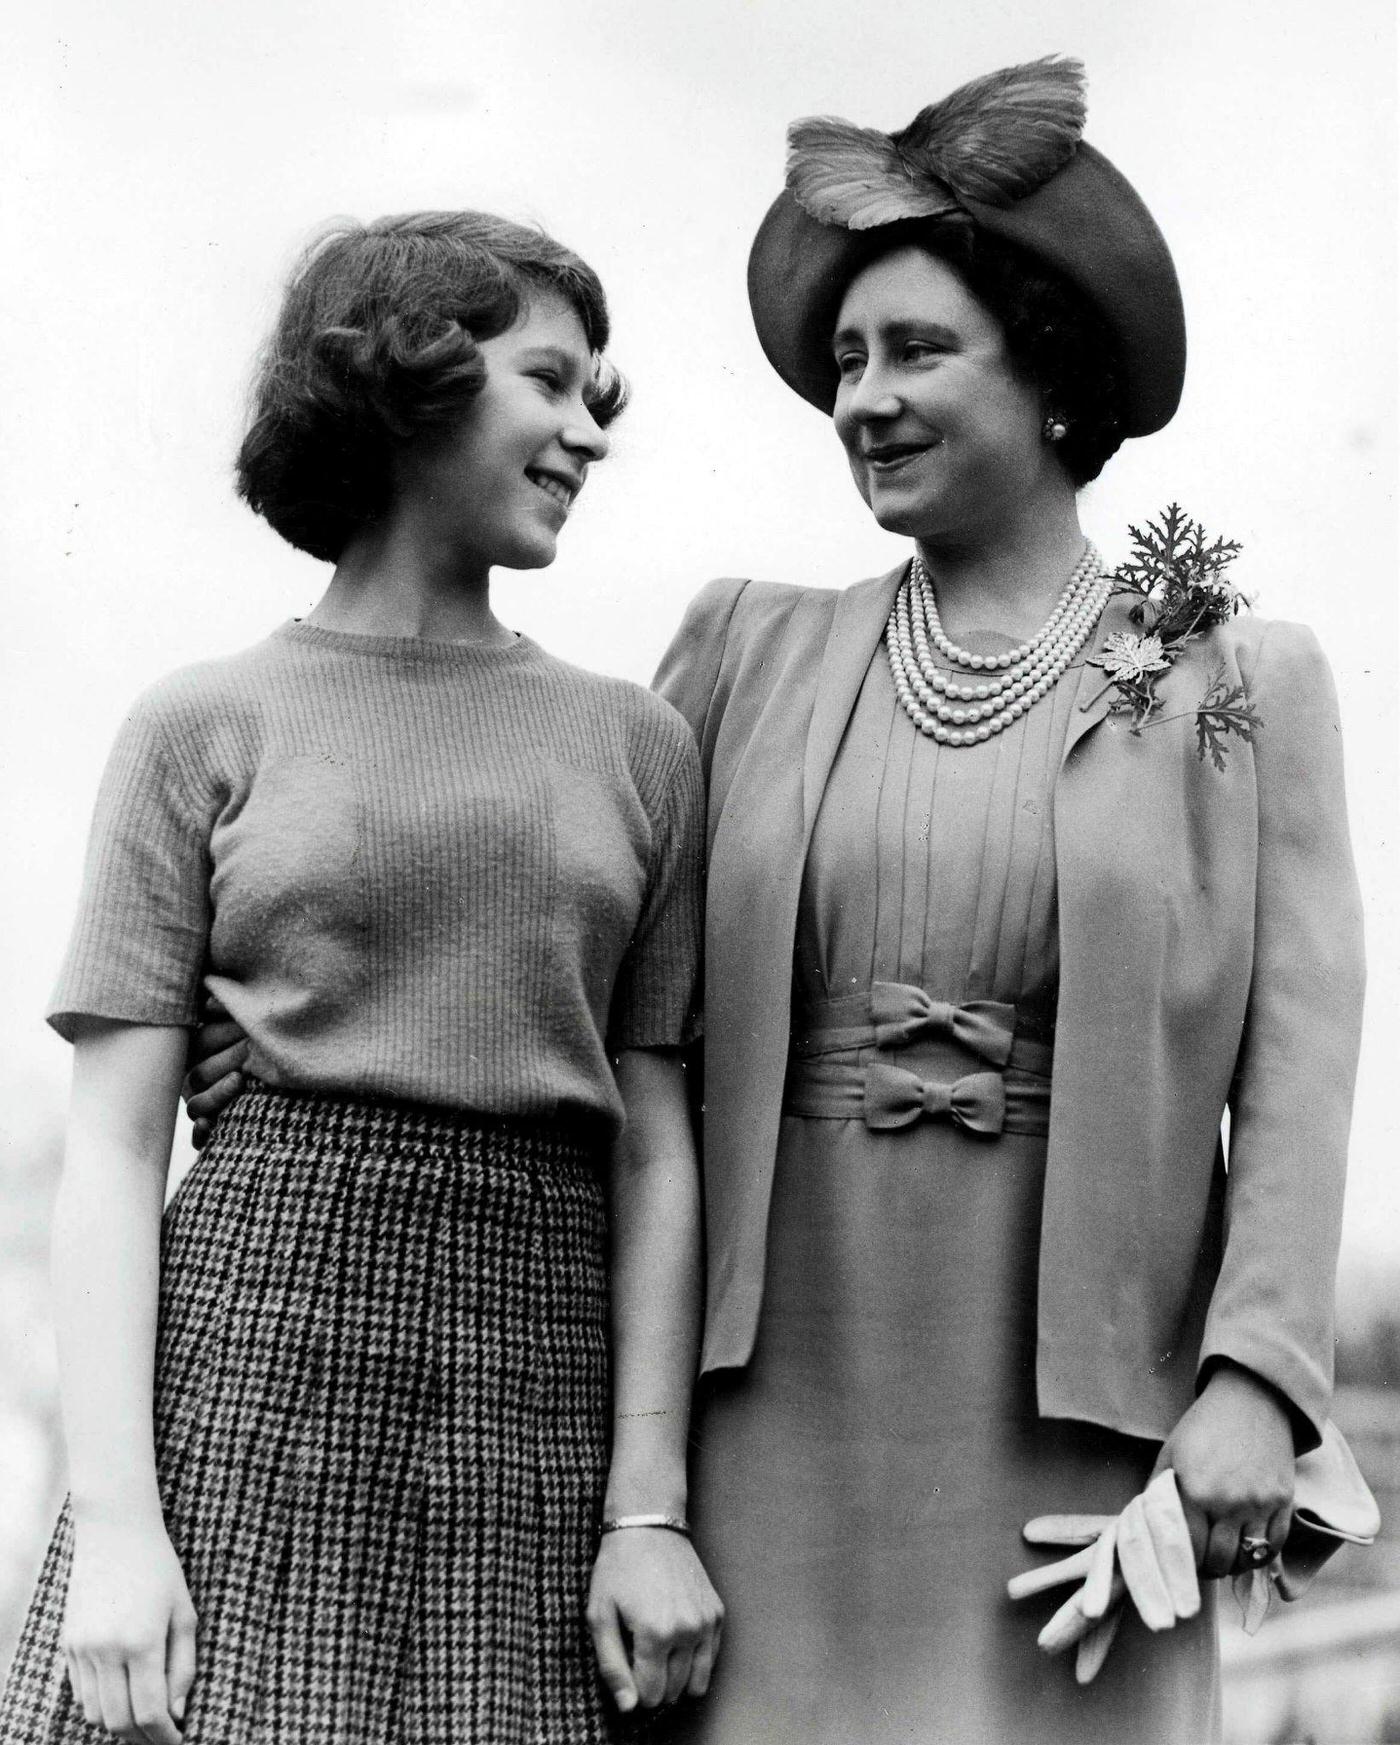 Queen Elizabeth The Queen Mother (1900-2002) posed together with her daughter, Princess Elizabeth, at Royal Lodge, Windsor, Berkshire, April 1940.